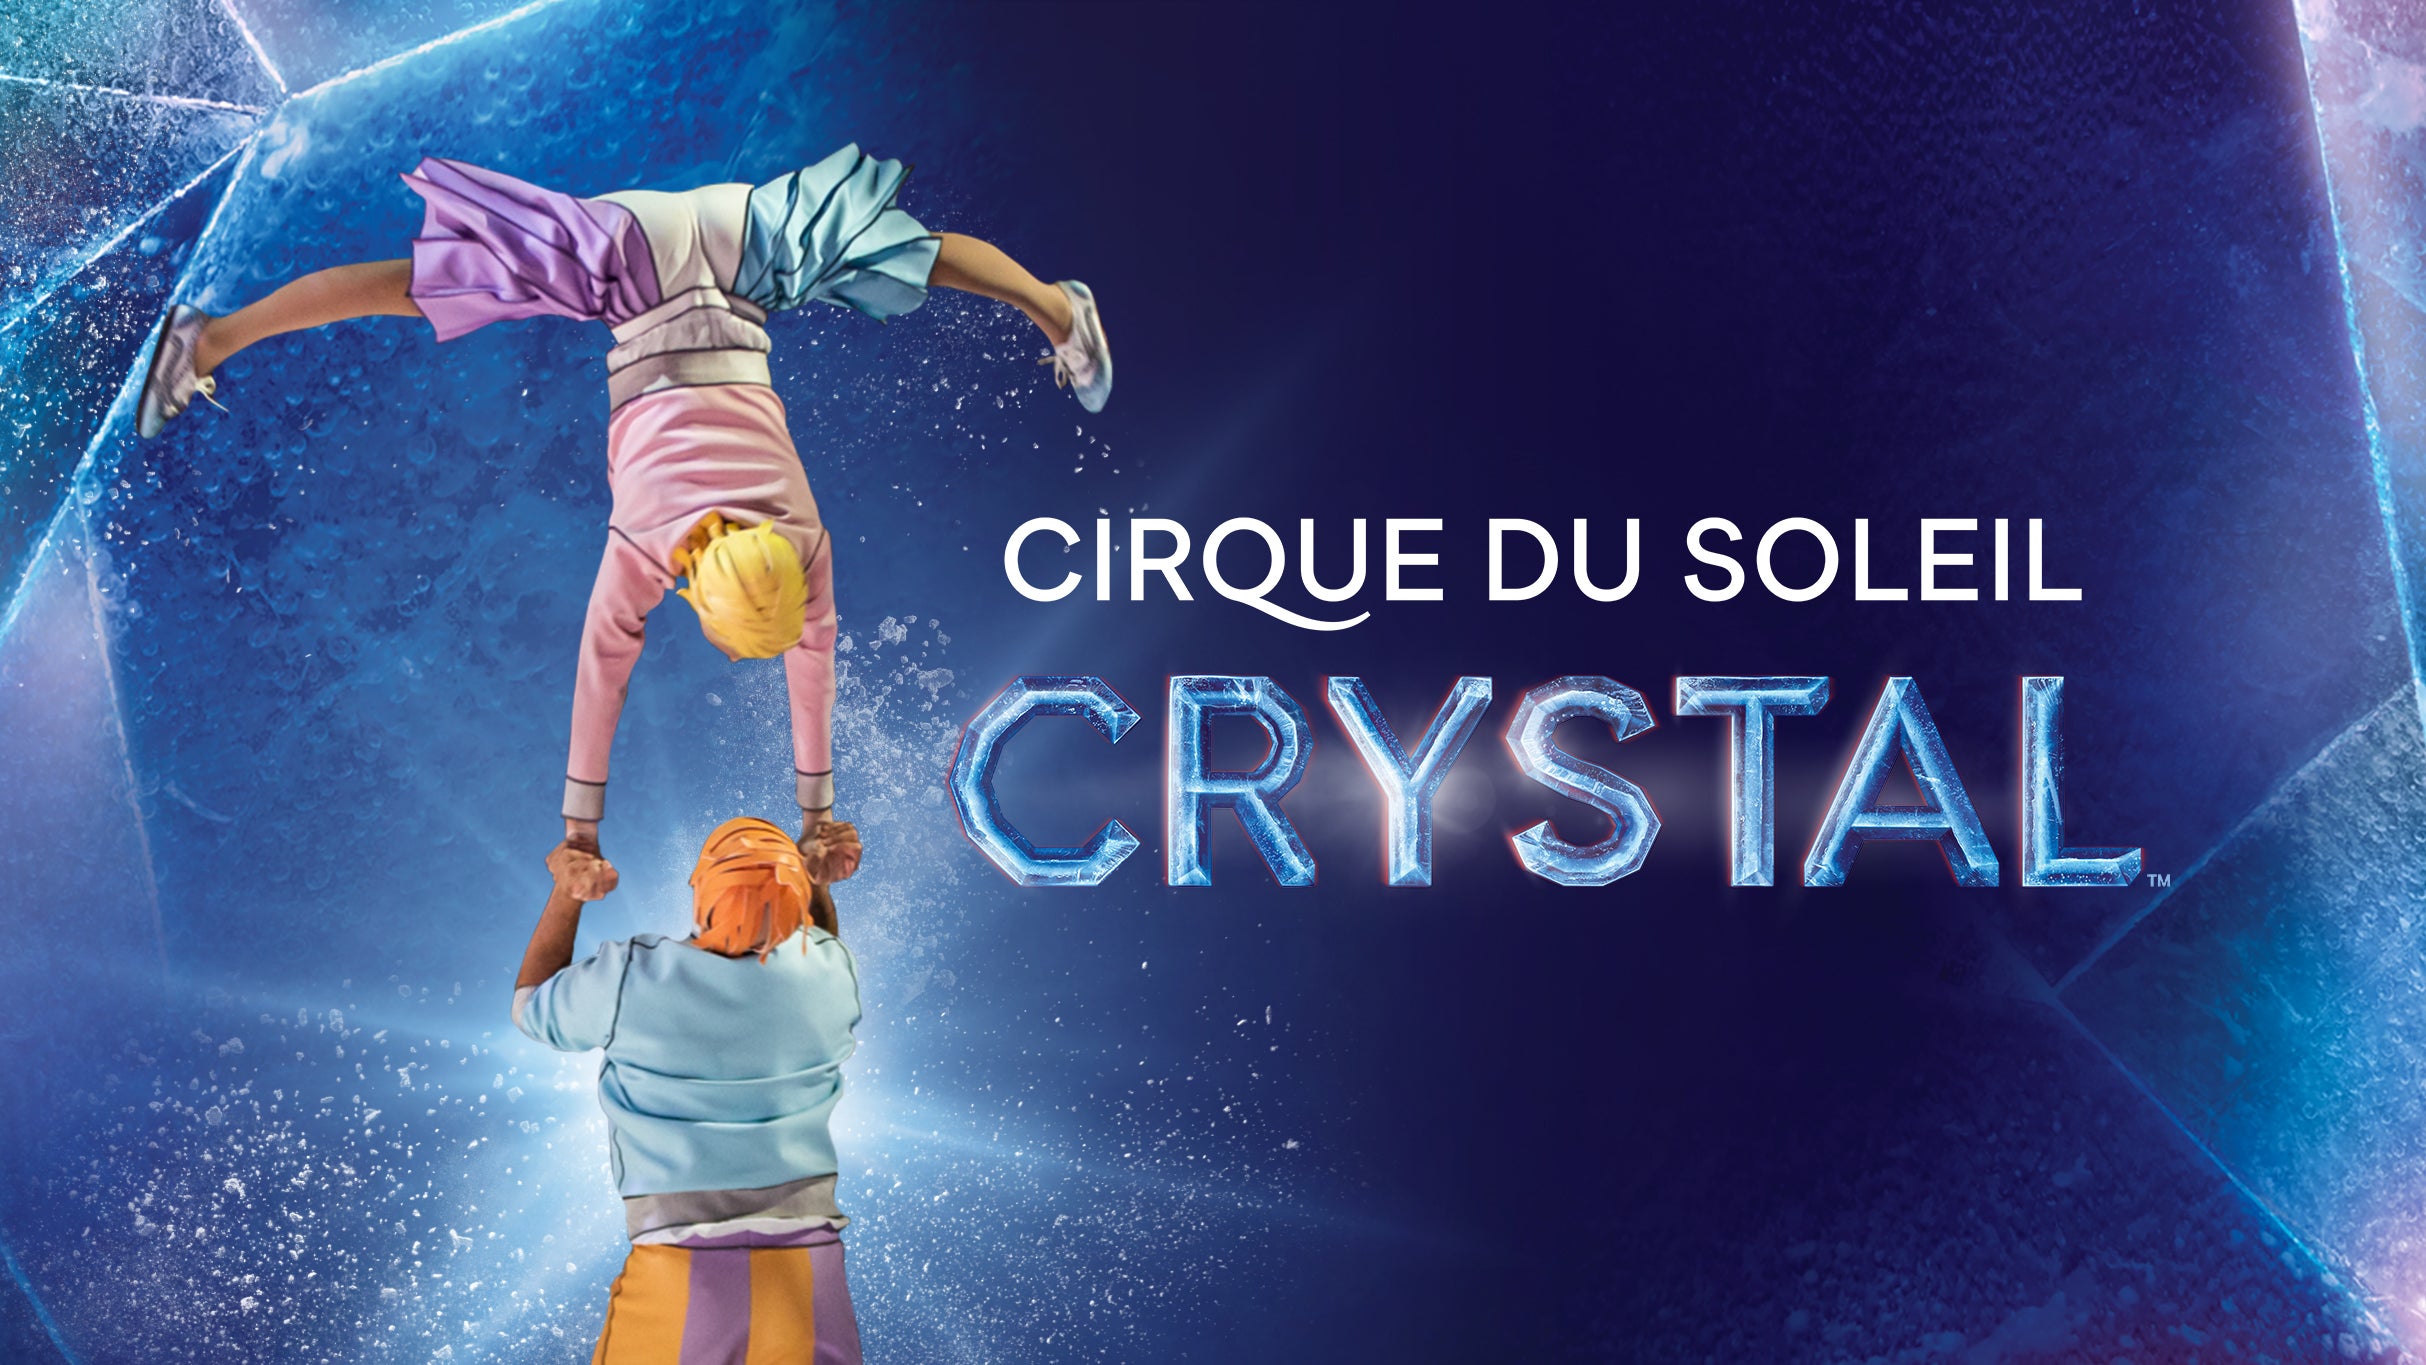 Cirque du Soleil: Crystal in Tucson promo photo for Group presale offer code